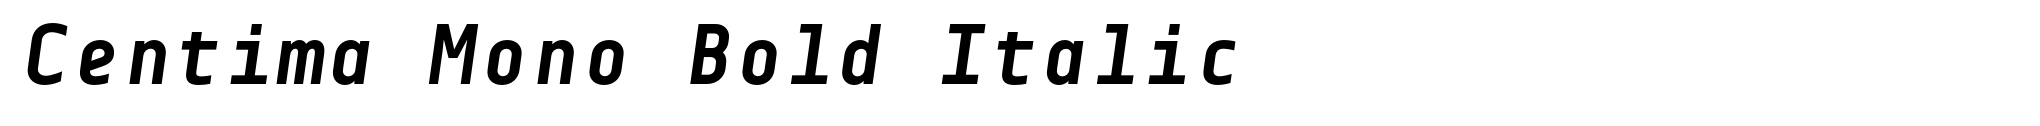 Centima Mono Bold Italic image